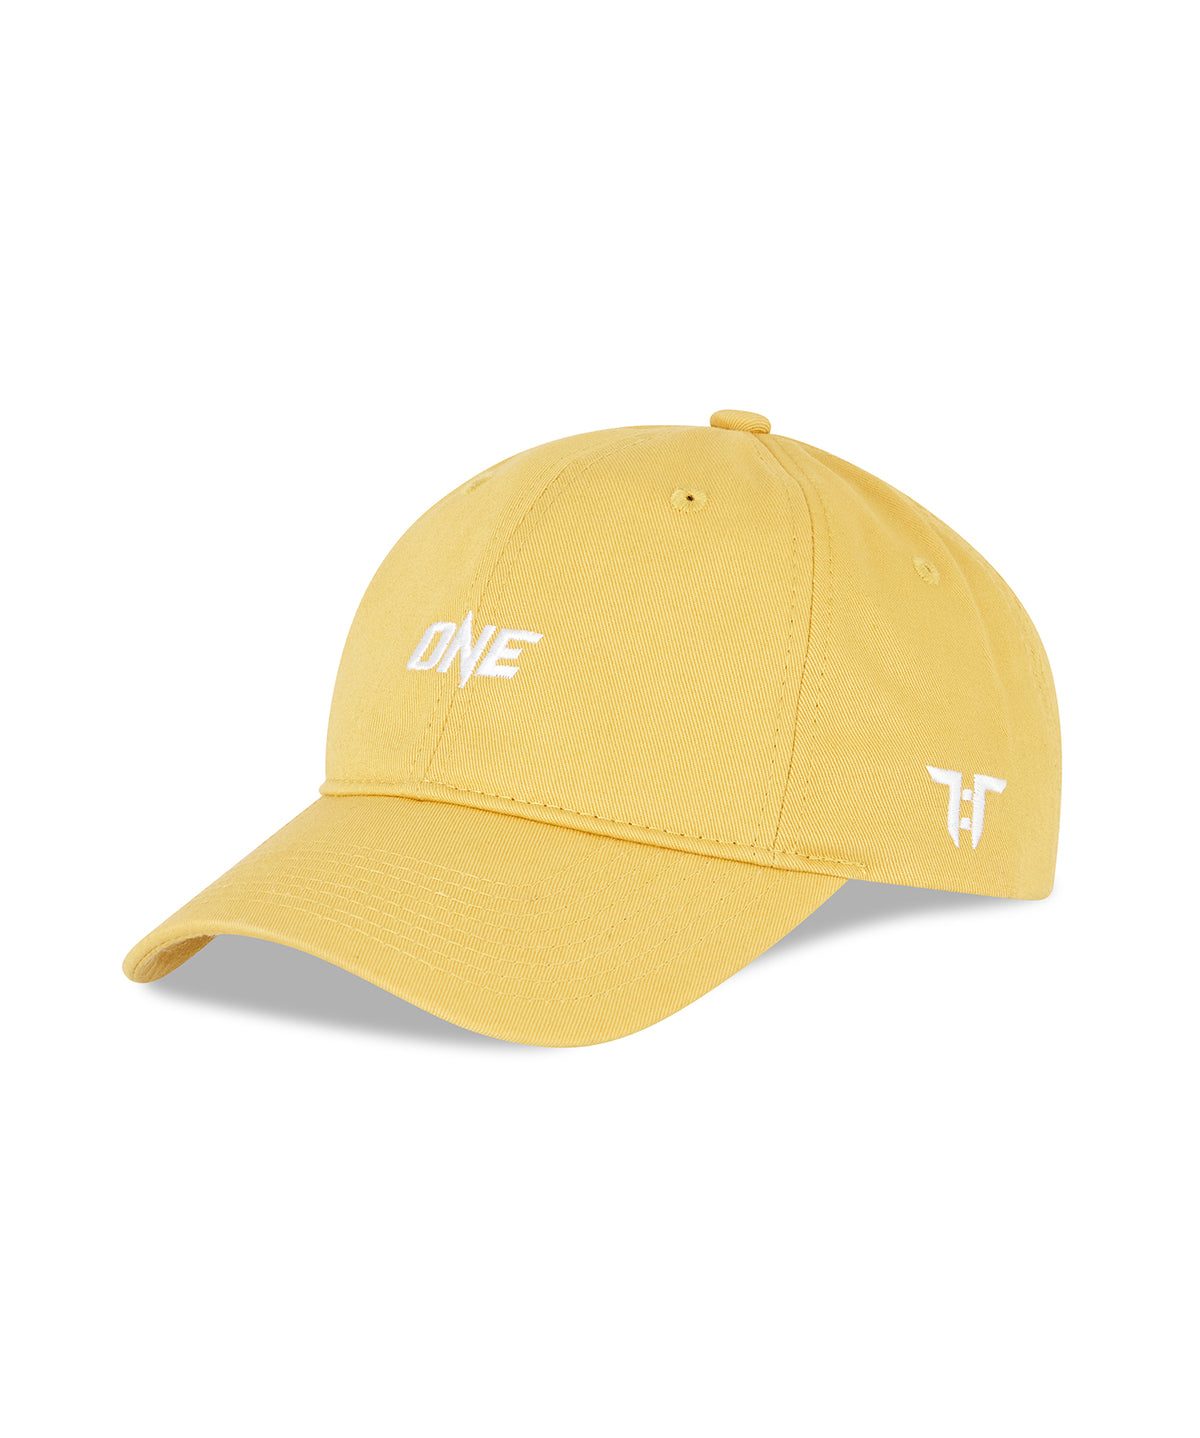 ONE x Tokyo Time SL Collab Cap (Yellow/White)